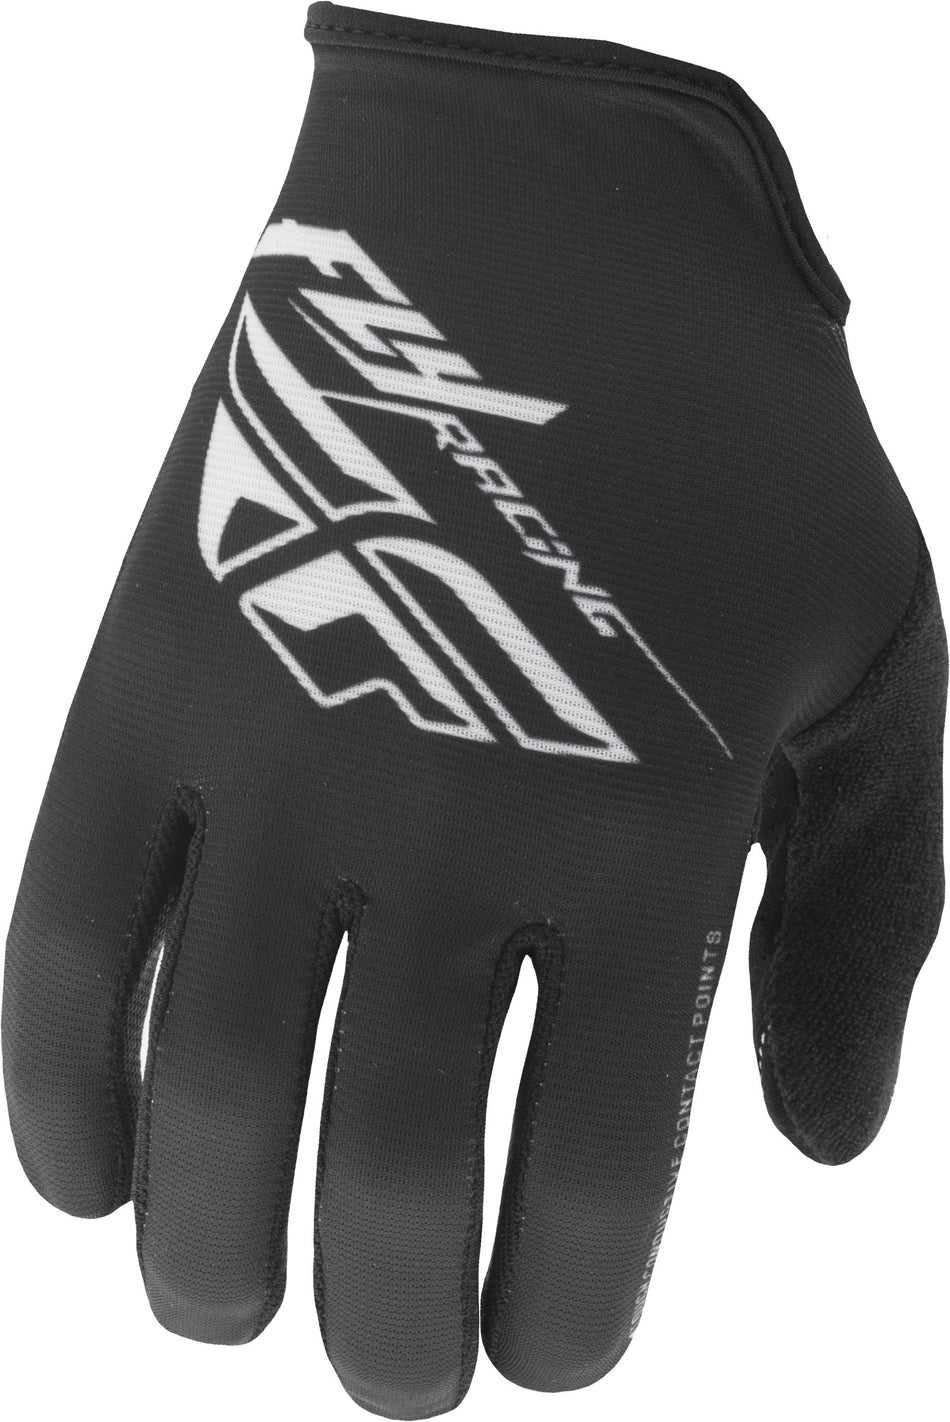 FLY RACING Media Gloves Black Sz 13 350-09013